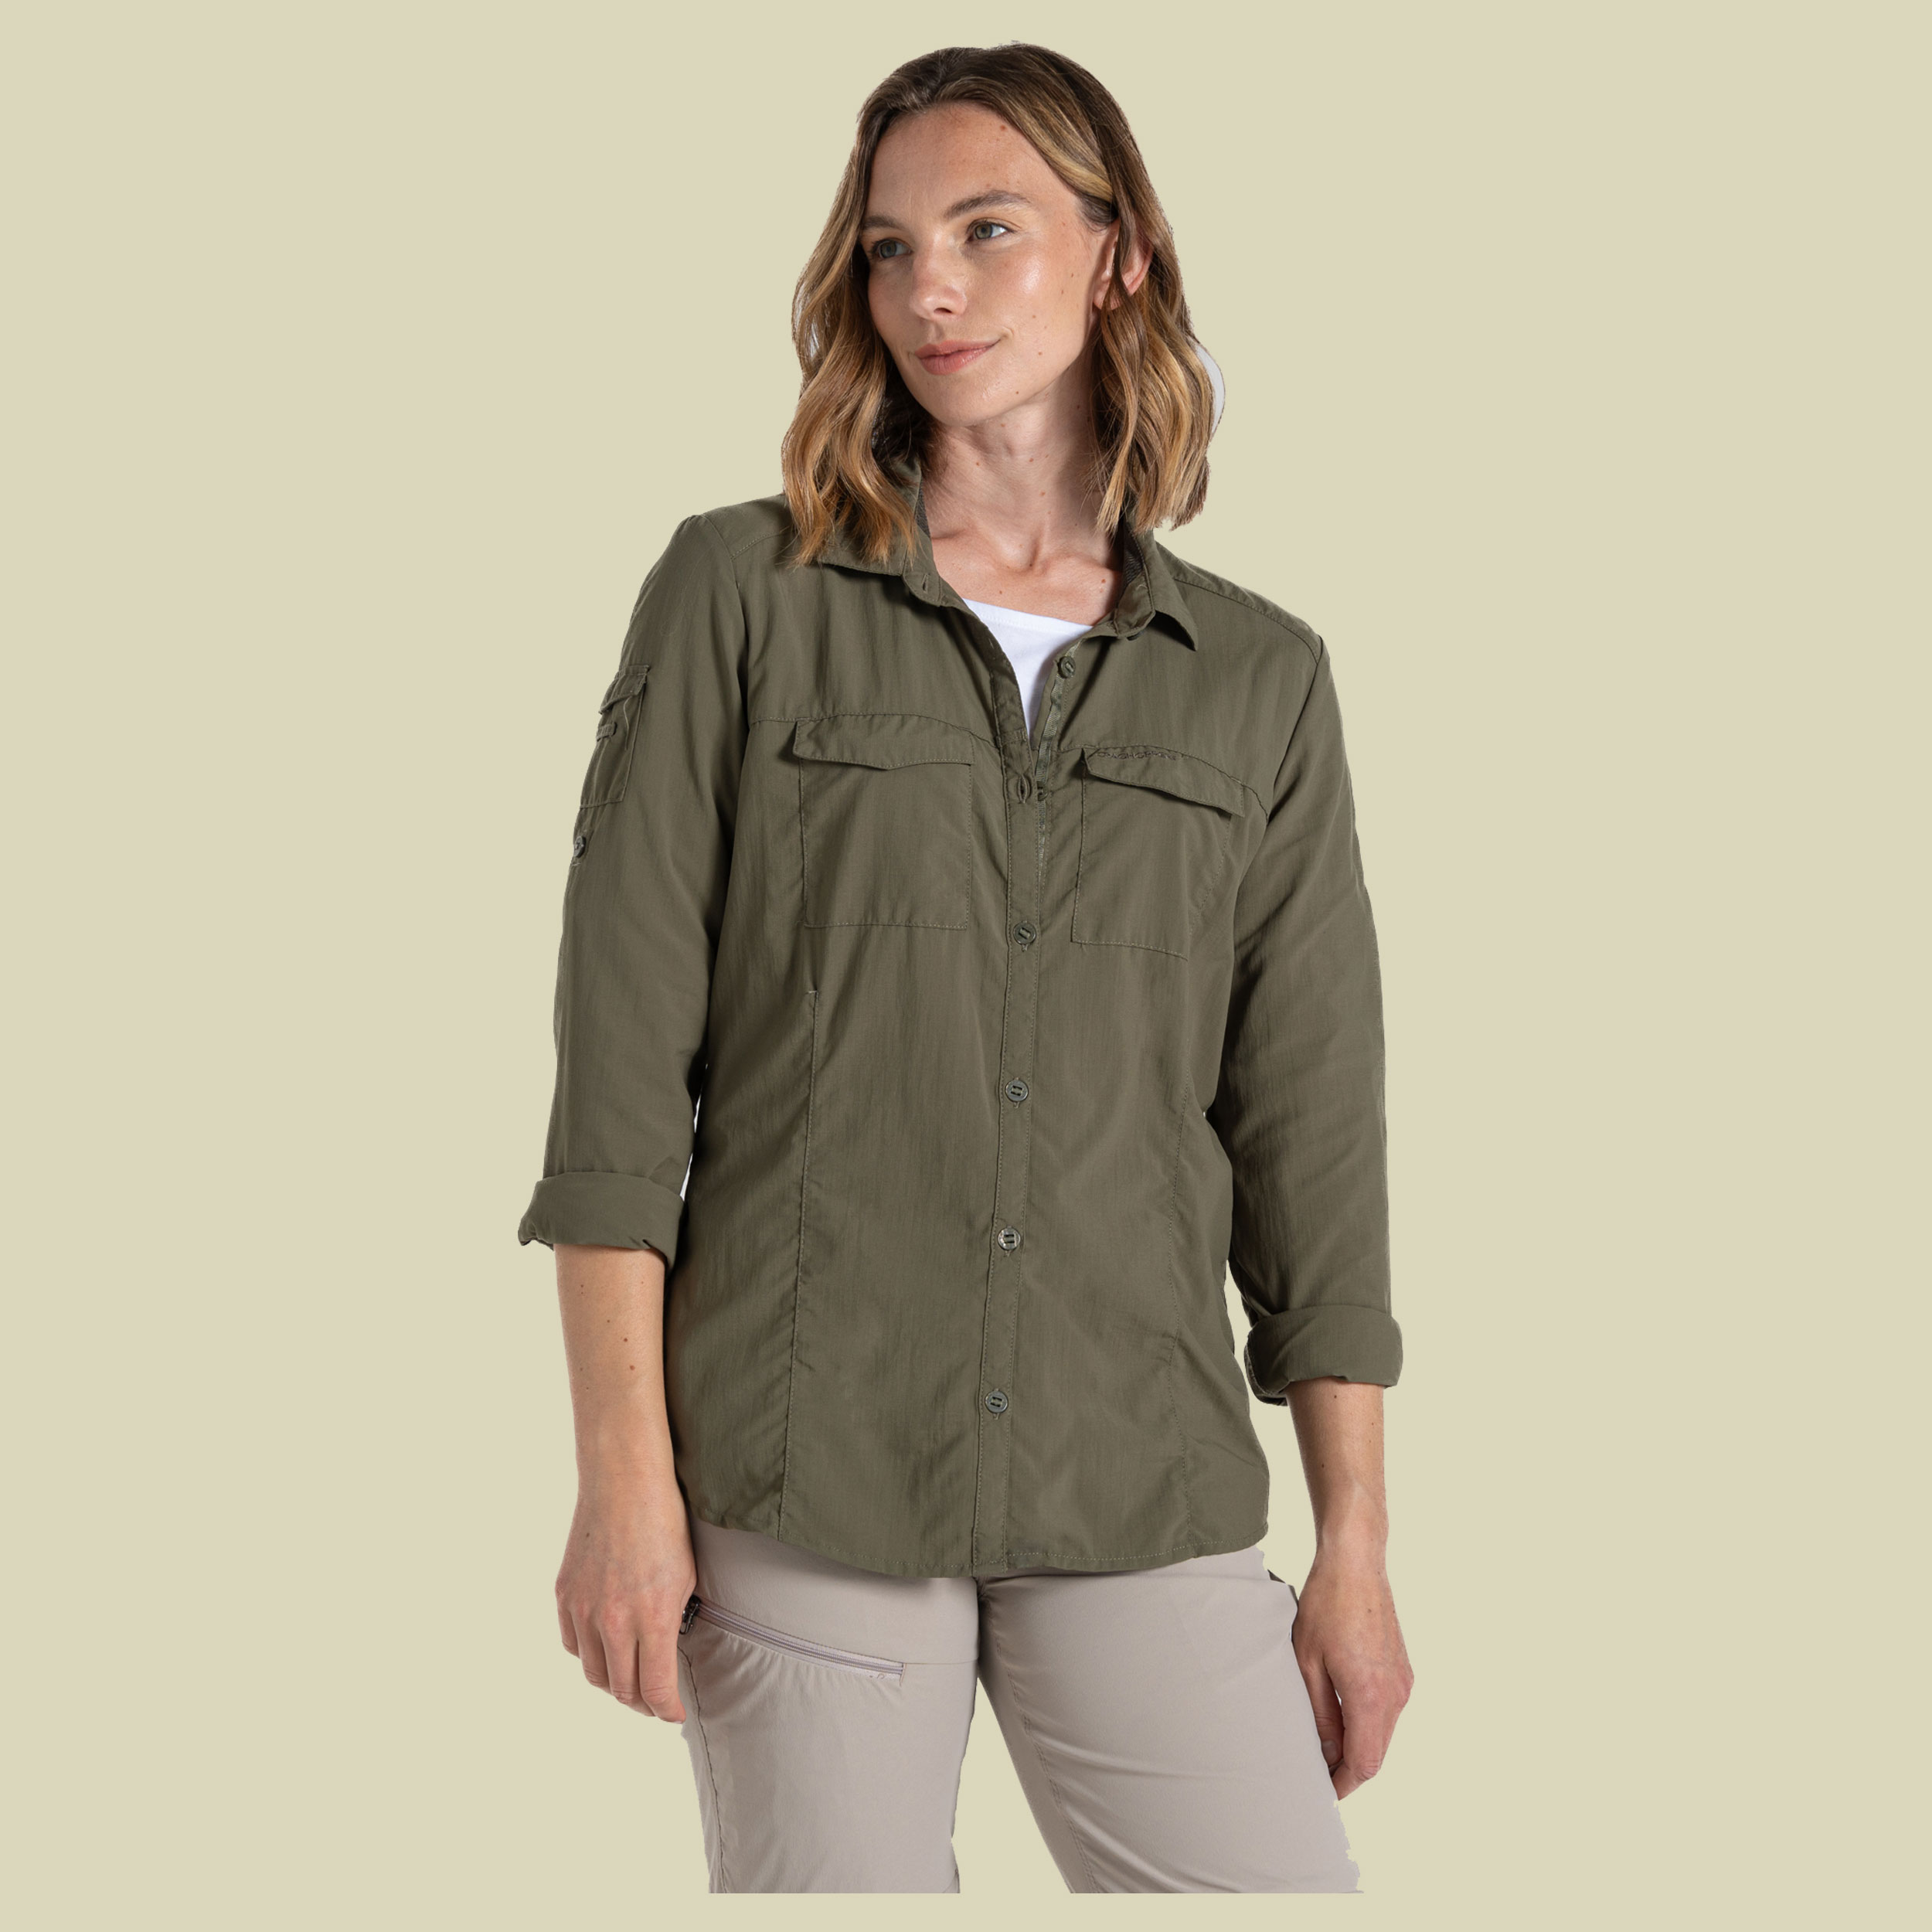 NosiLife Adventure Long Sleeved Shirt III Women 44 grün -wild olive (UK 18)